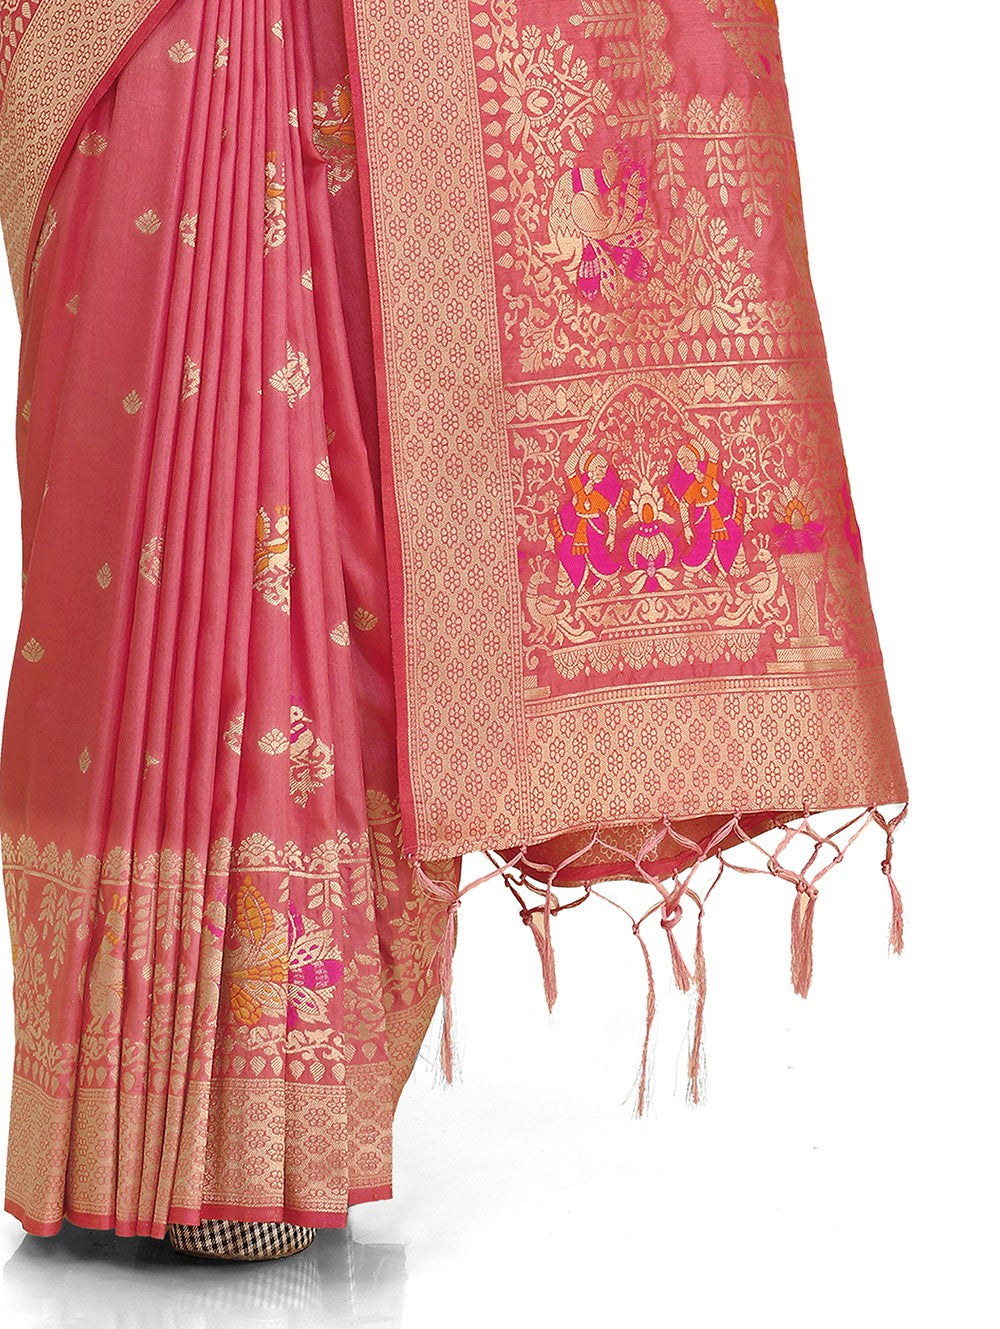 Trendy kanjivaram designer Silk saree at affordable rate